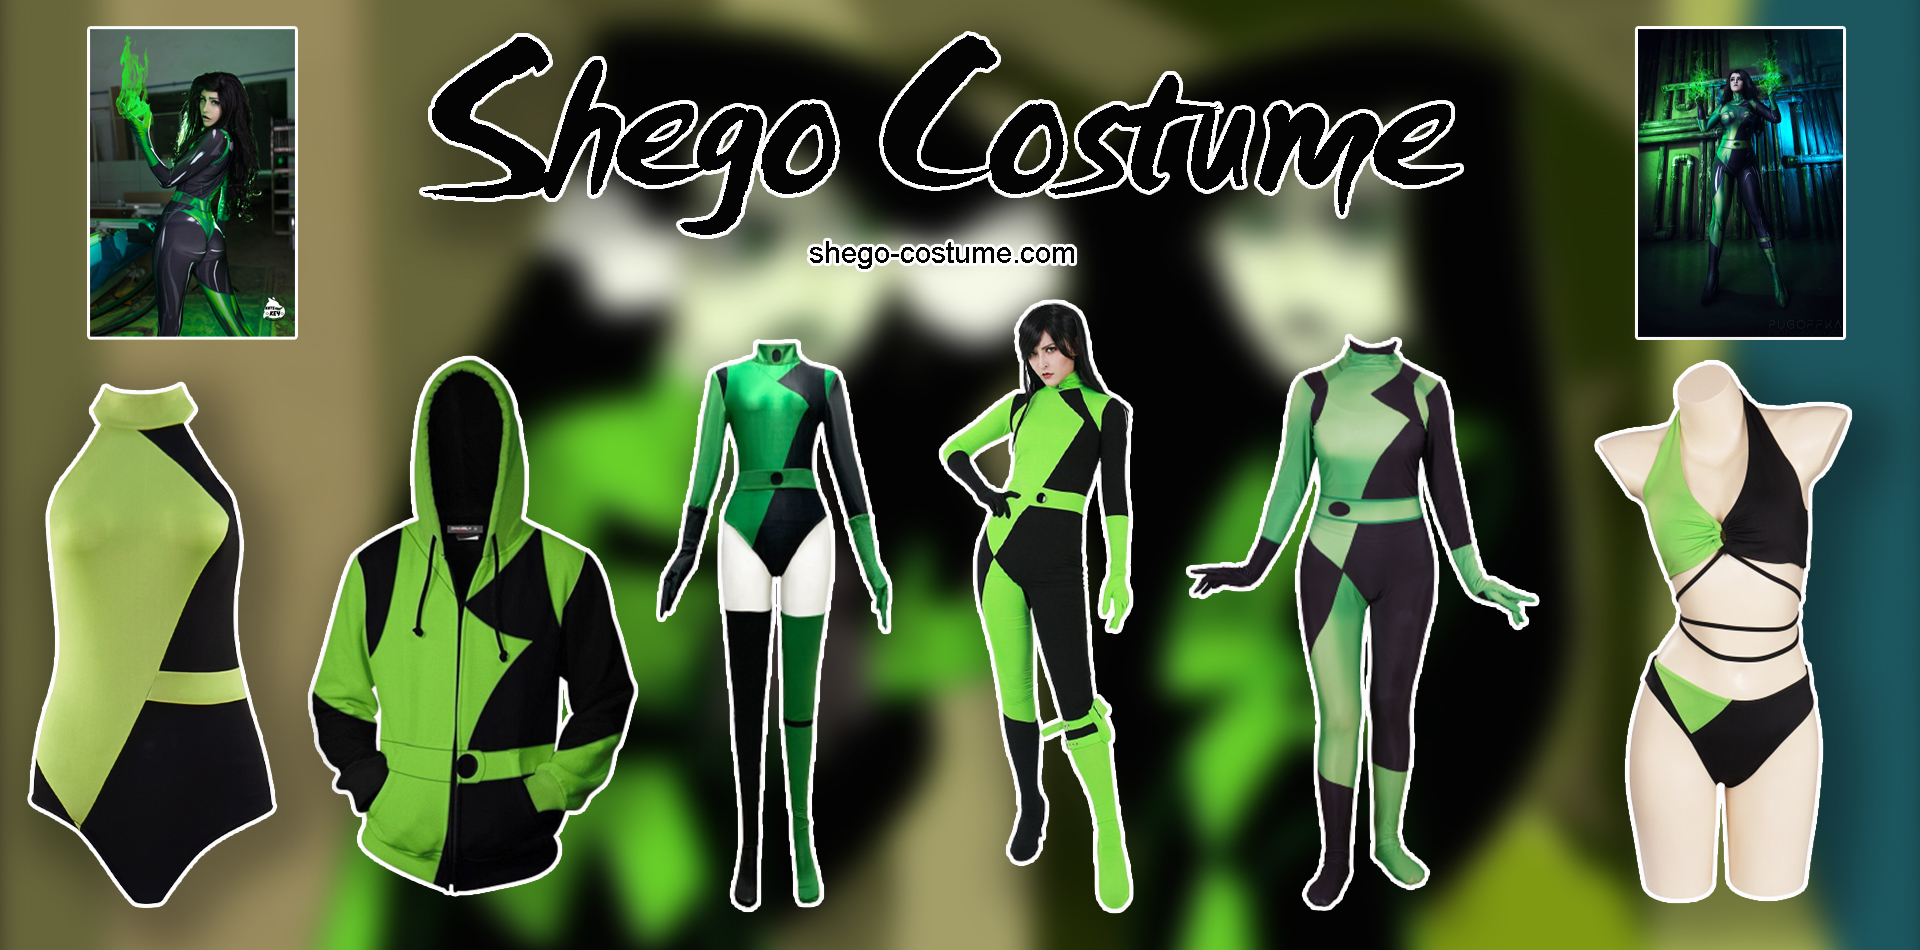 shego-costume-banner